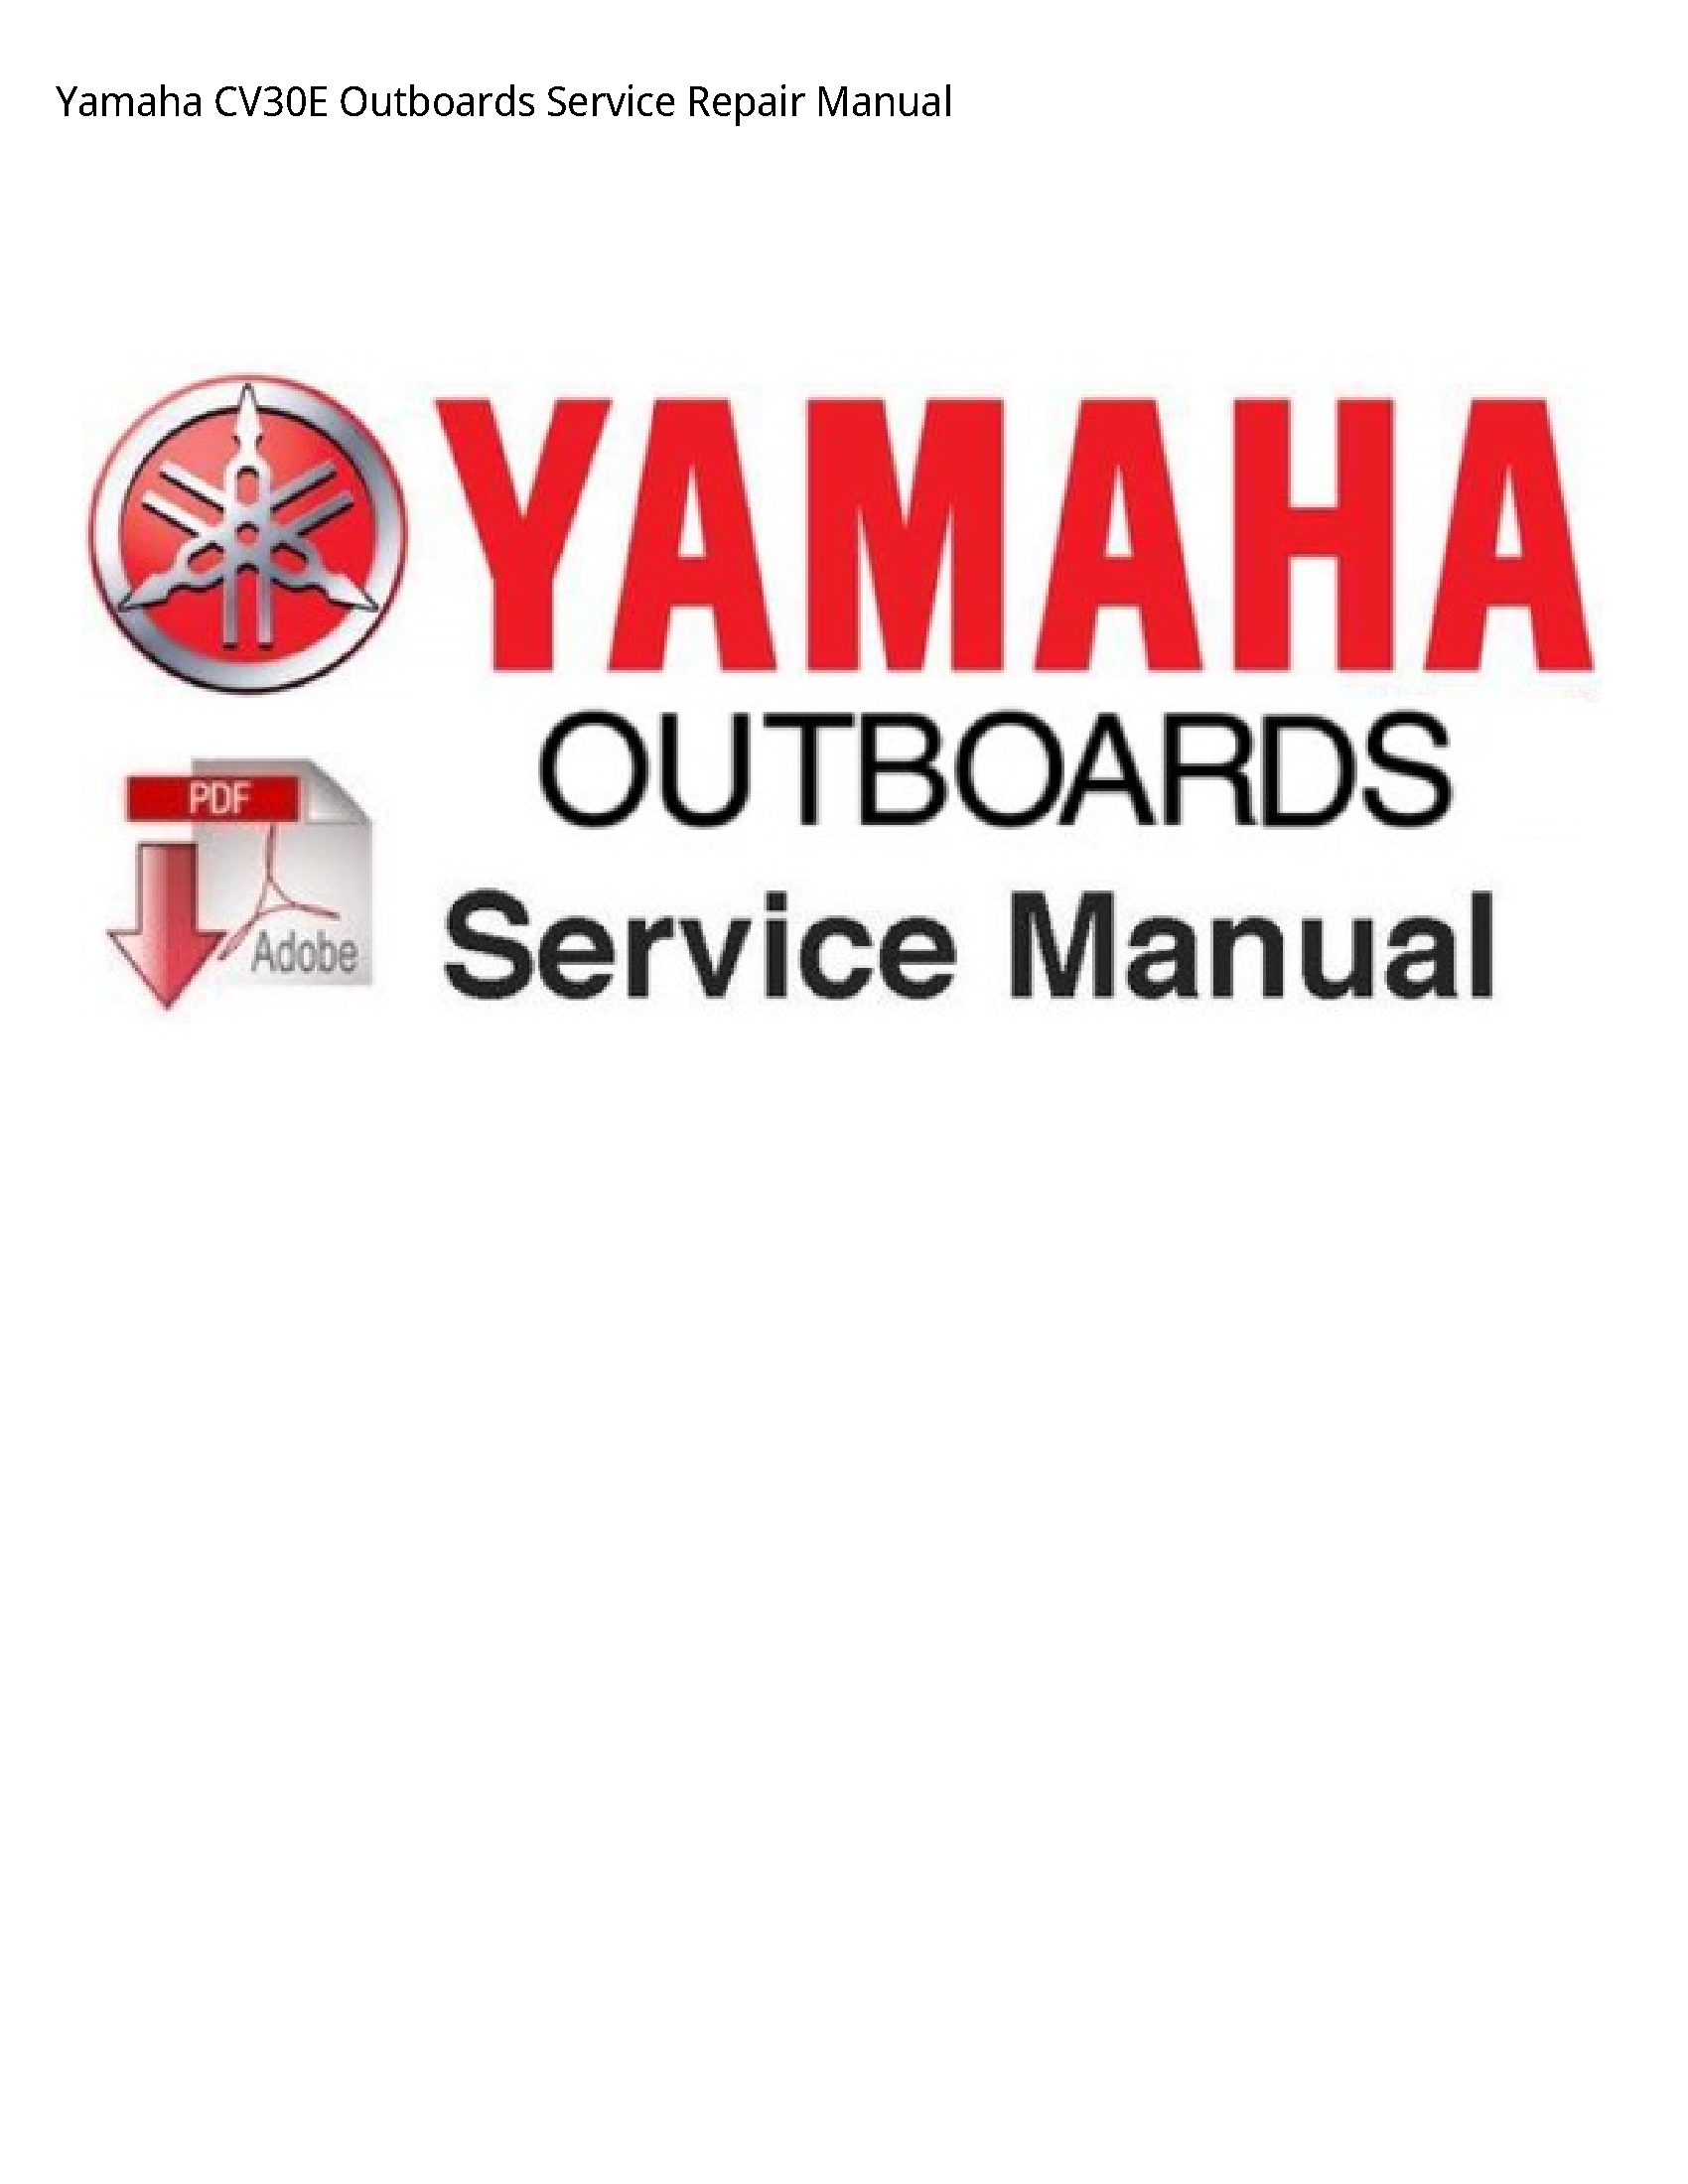 Yamaha CV30E Outboards manual